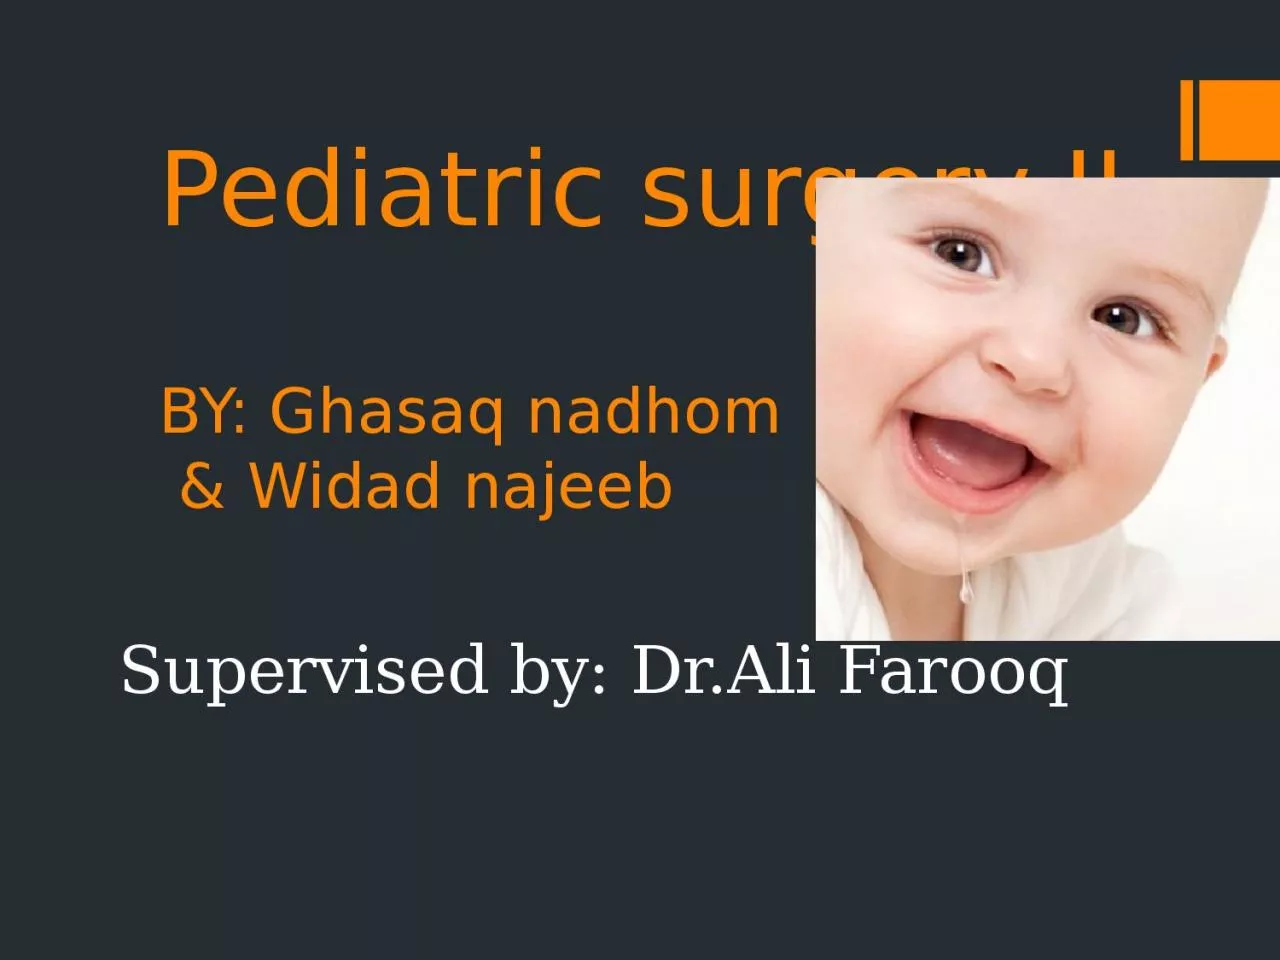 Pediatric surgery II BY: